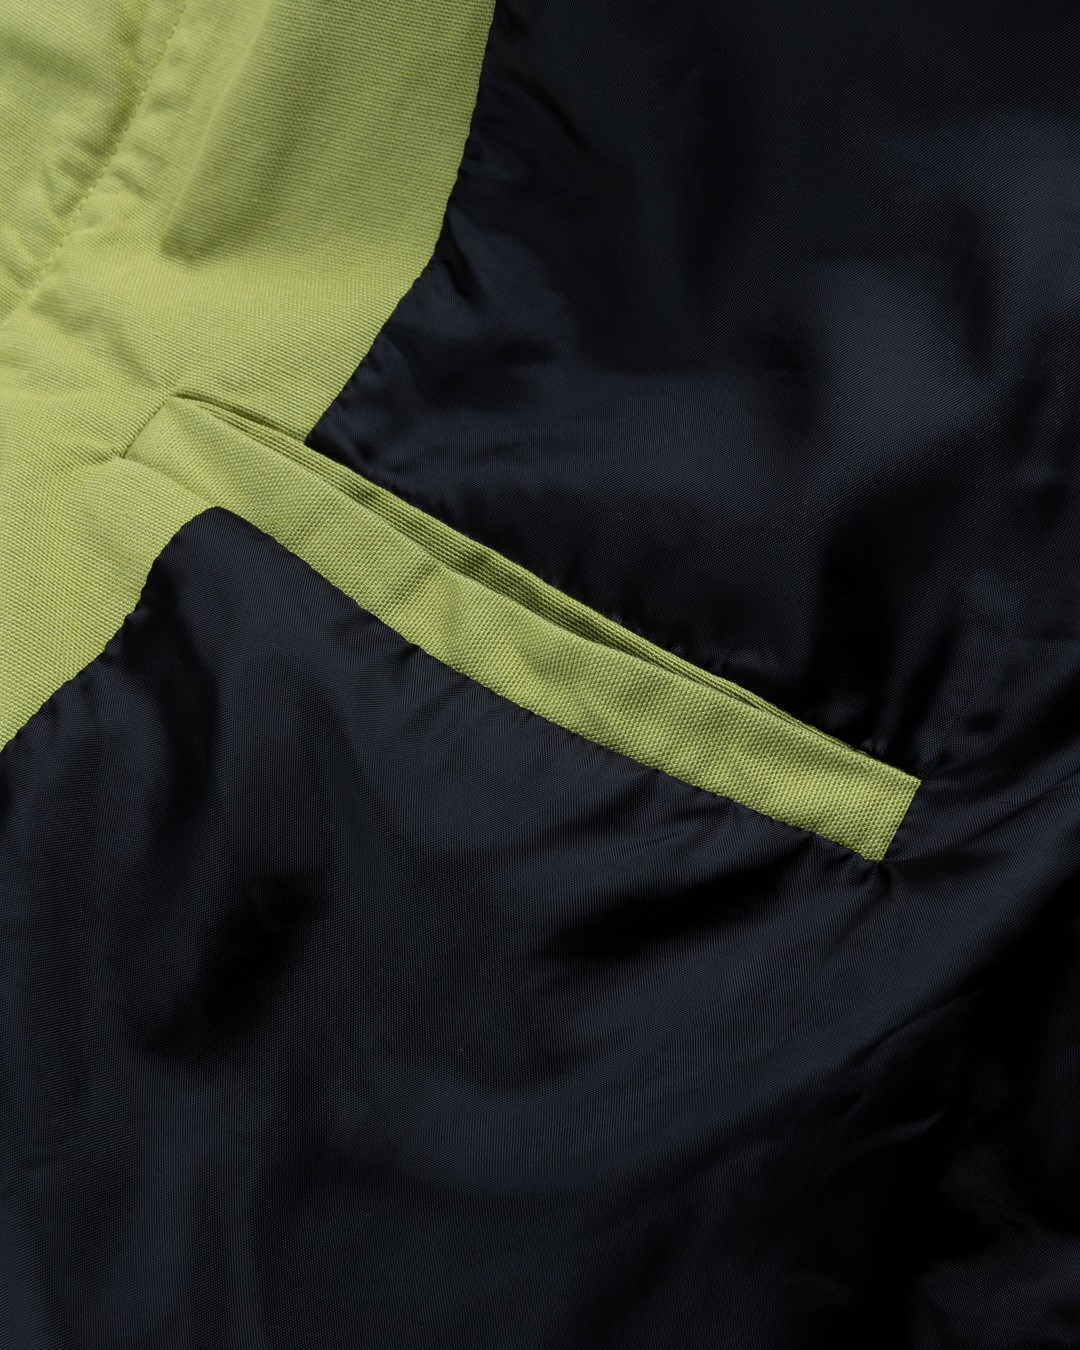 Winnie New York – Double Pocket Cotton Jacket Green - Outerwear - Green - Image 7